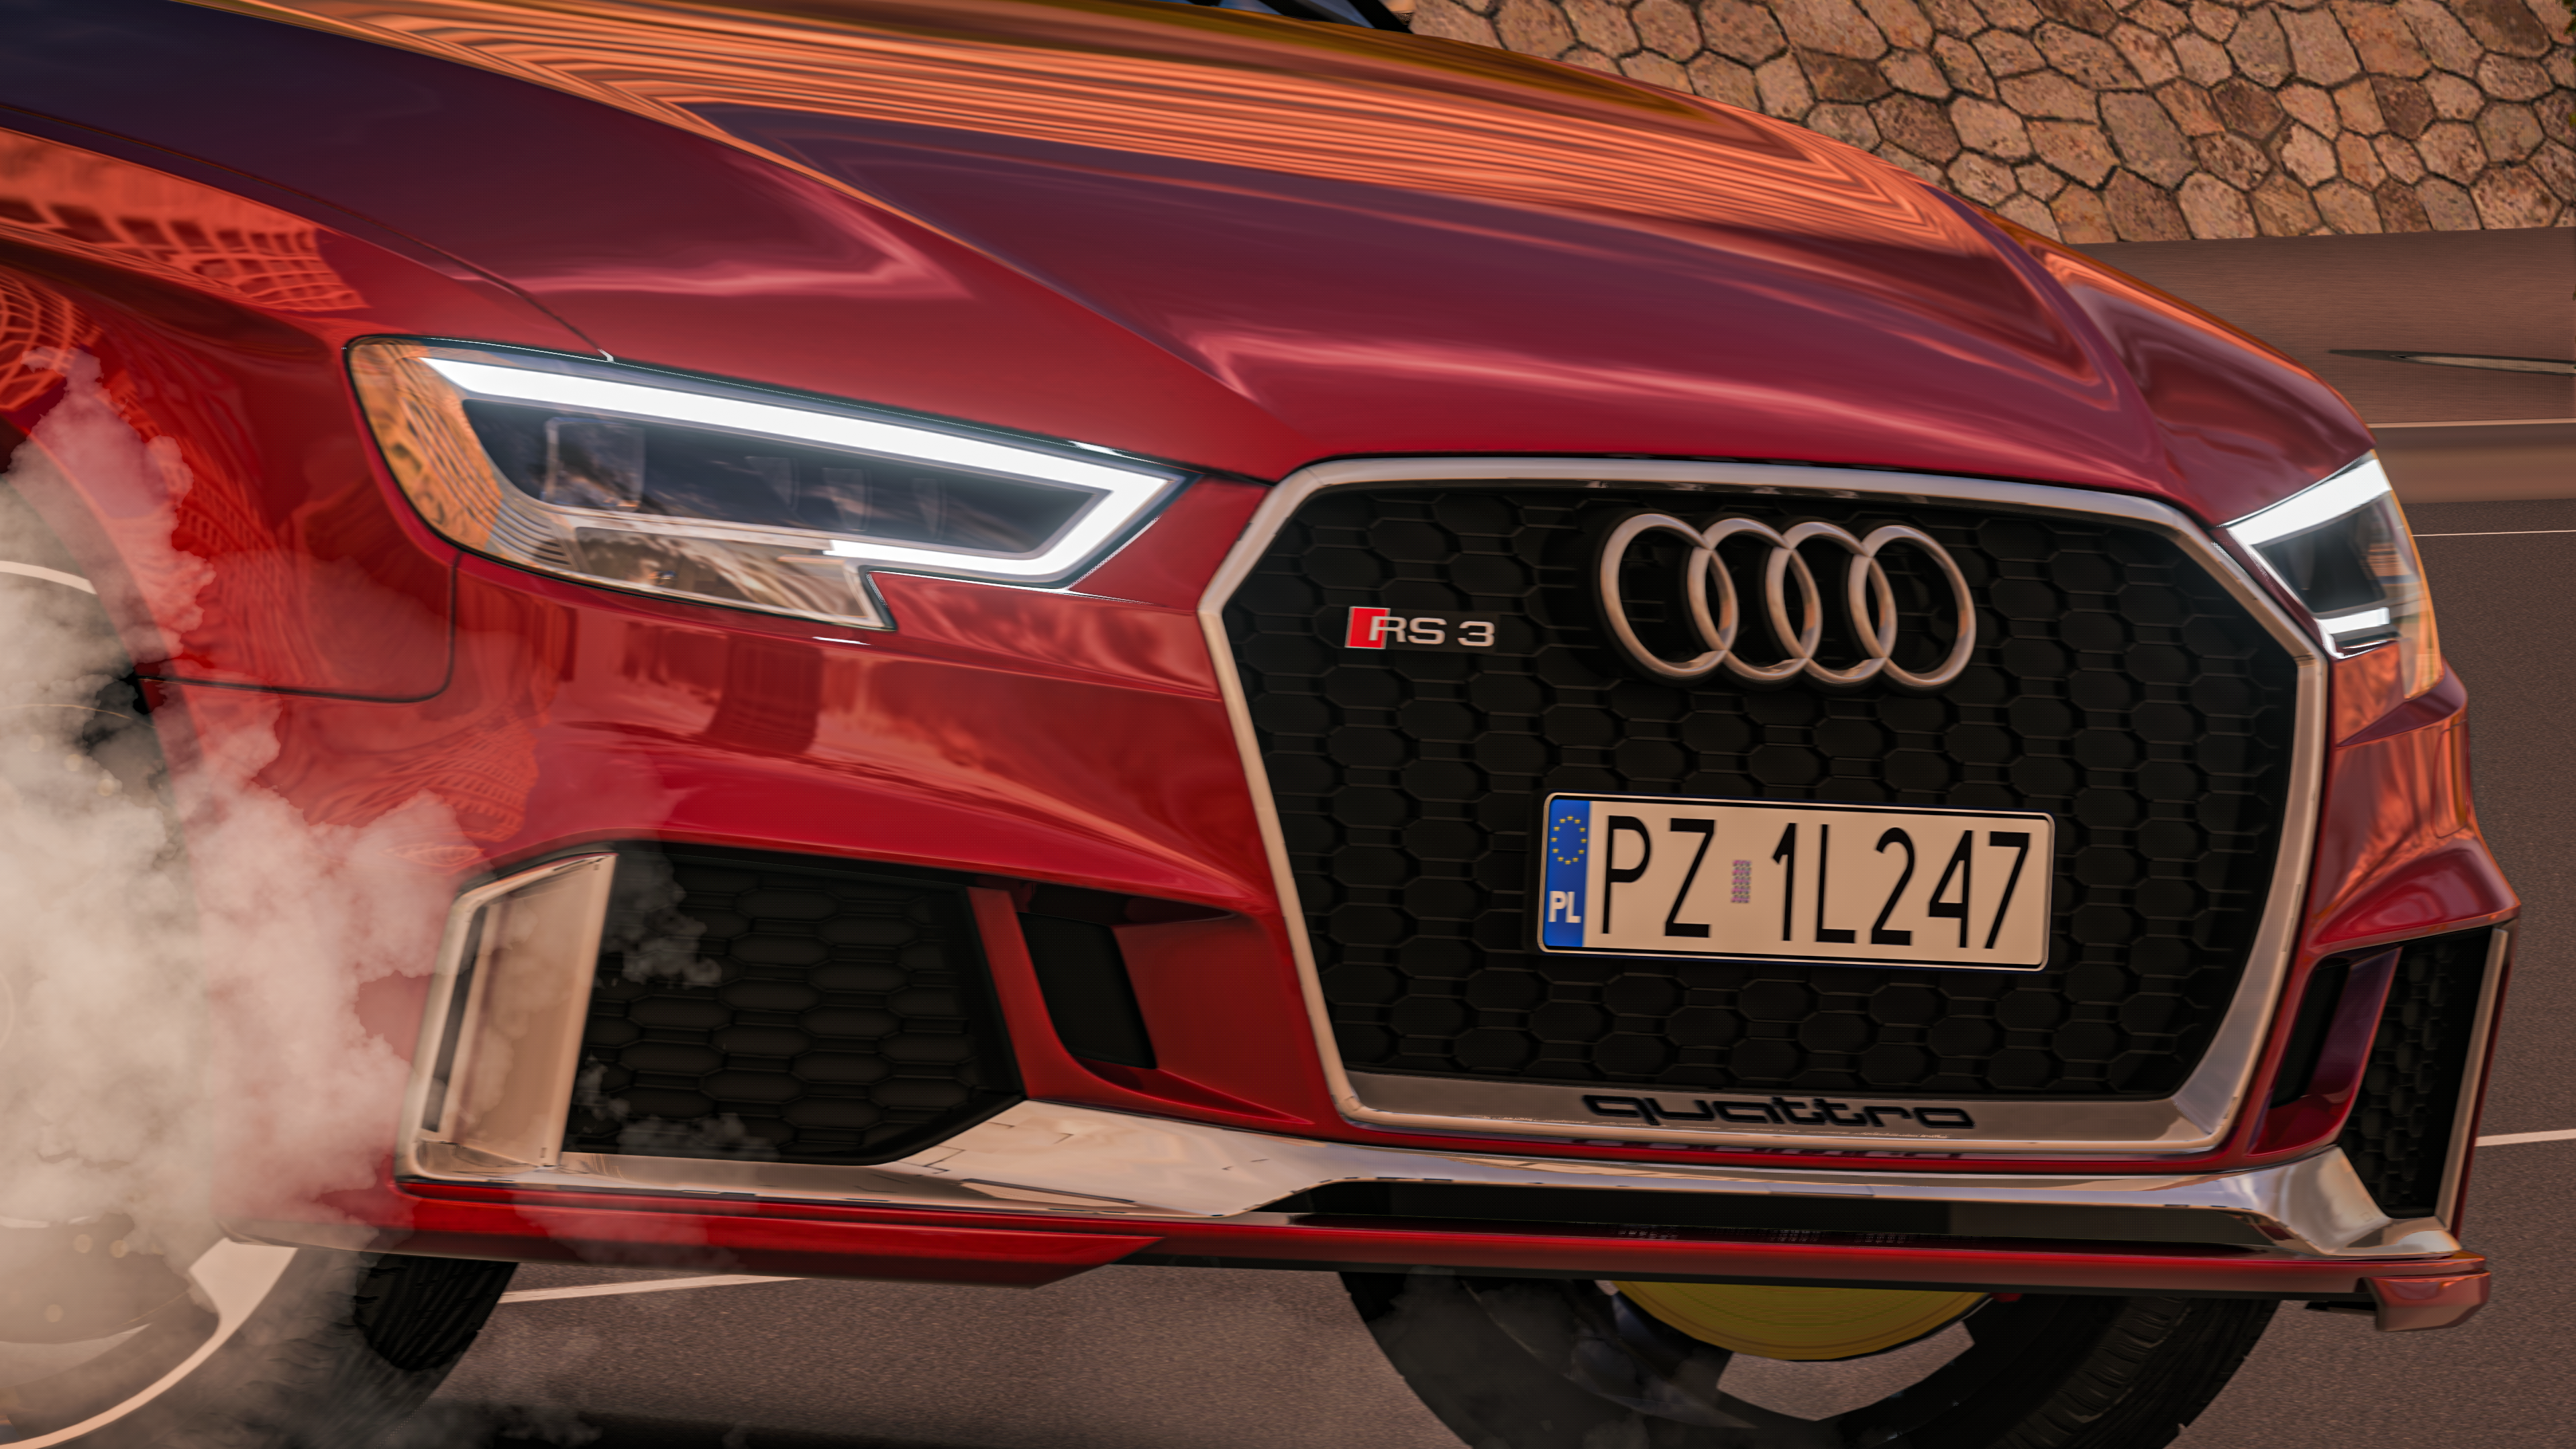 Audi RS3 Sportback #3 by AGAMHWP34 on DeviantArt